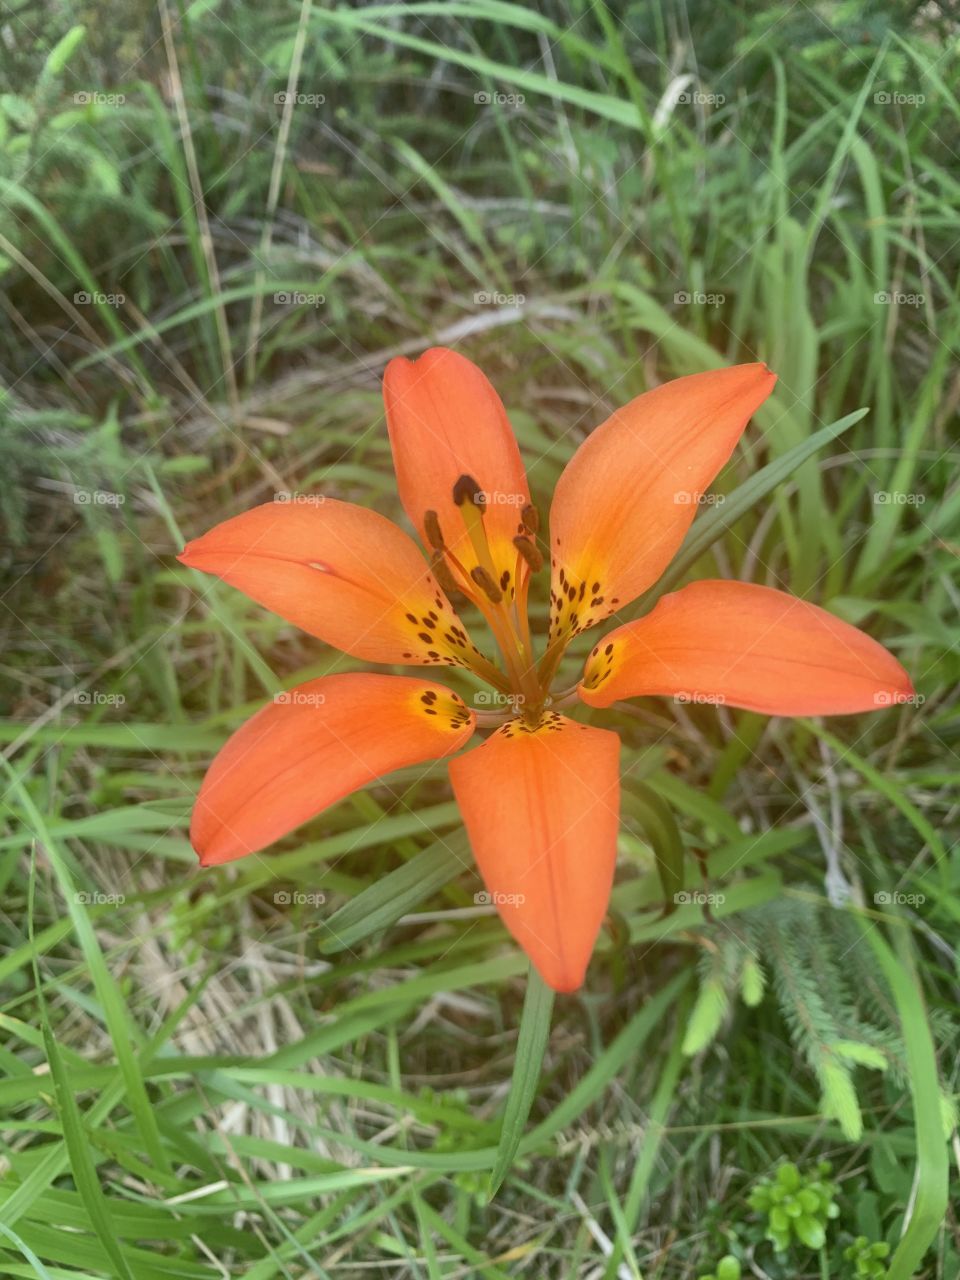 Tiger lily 